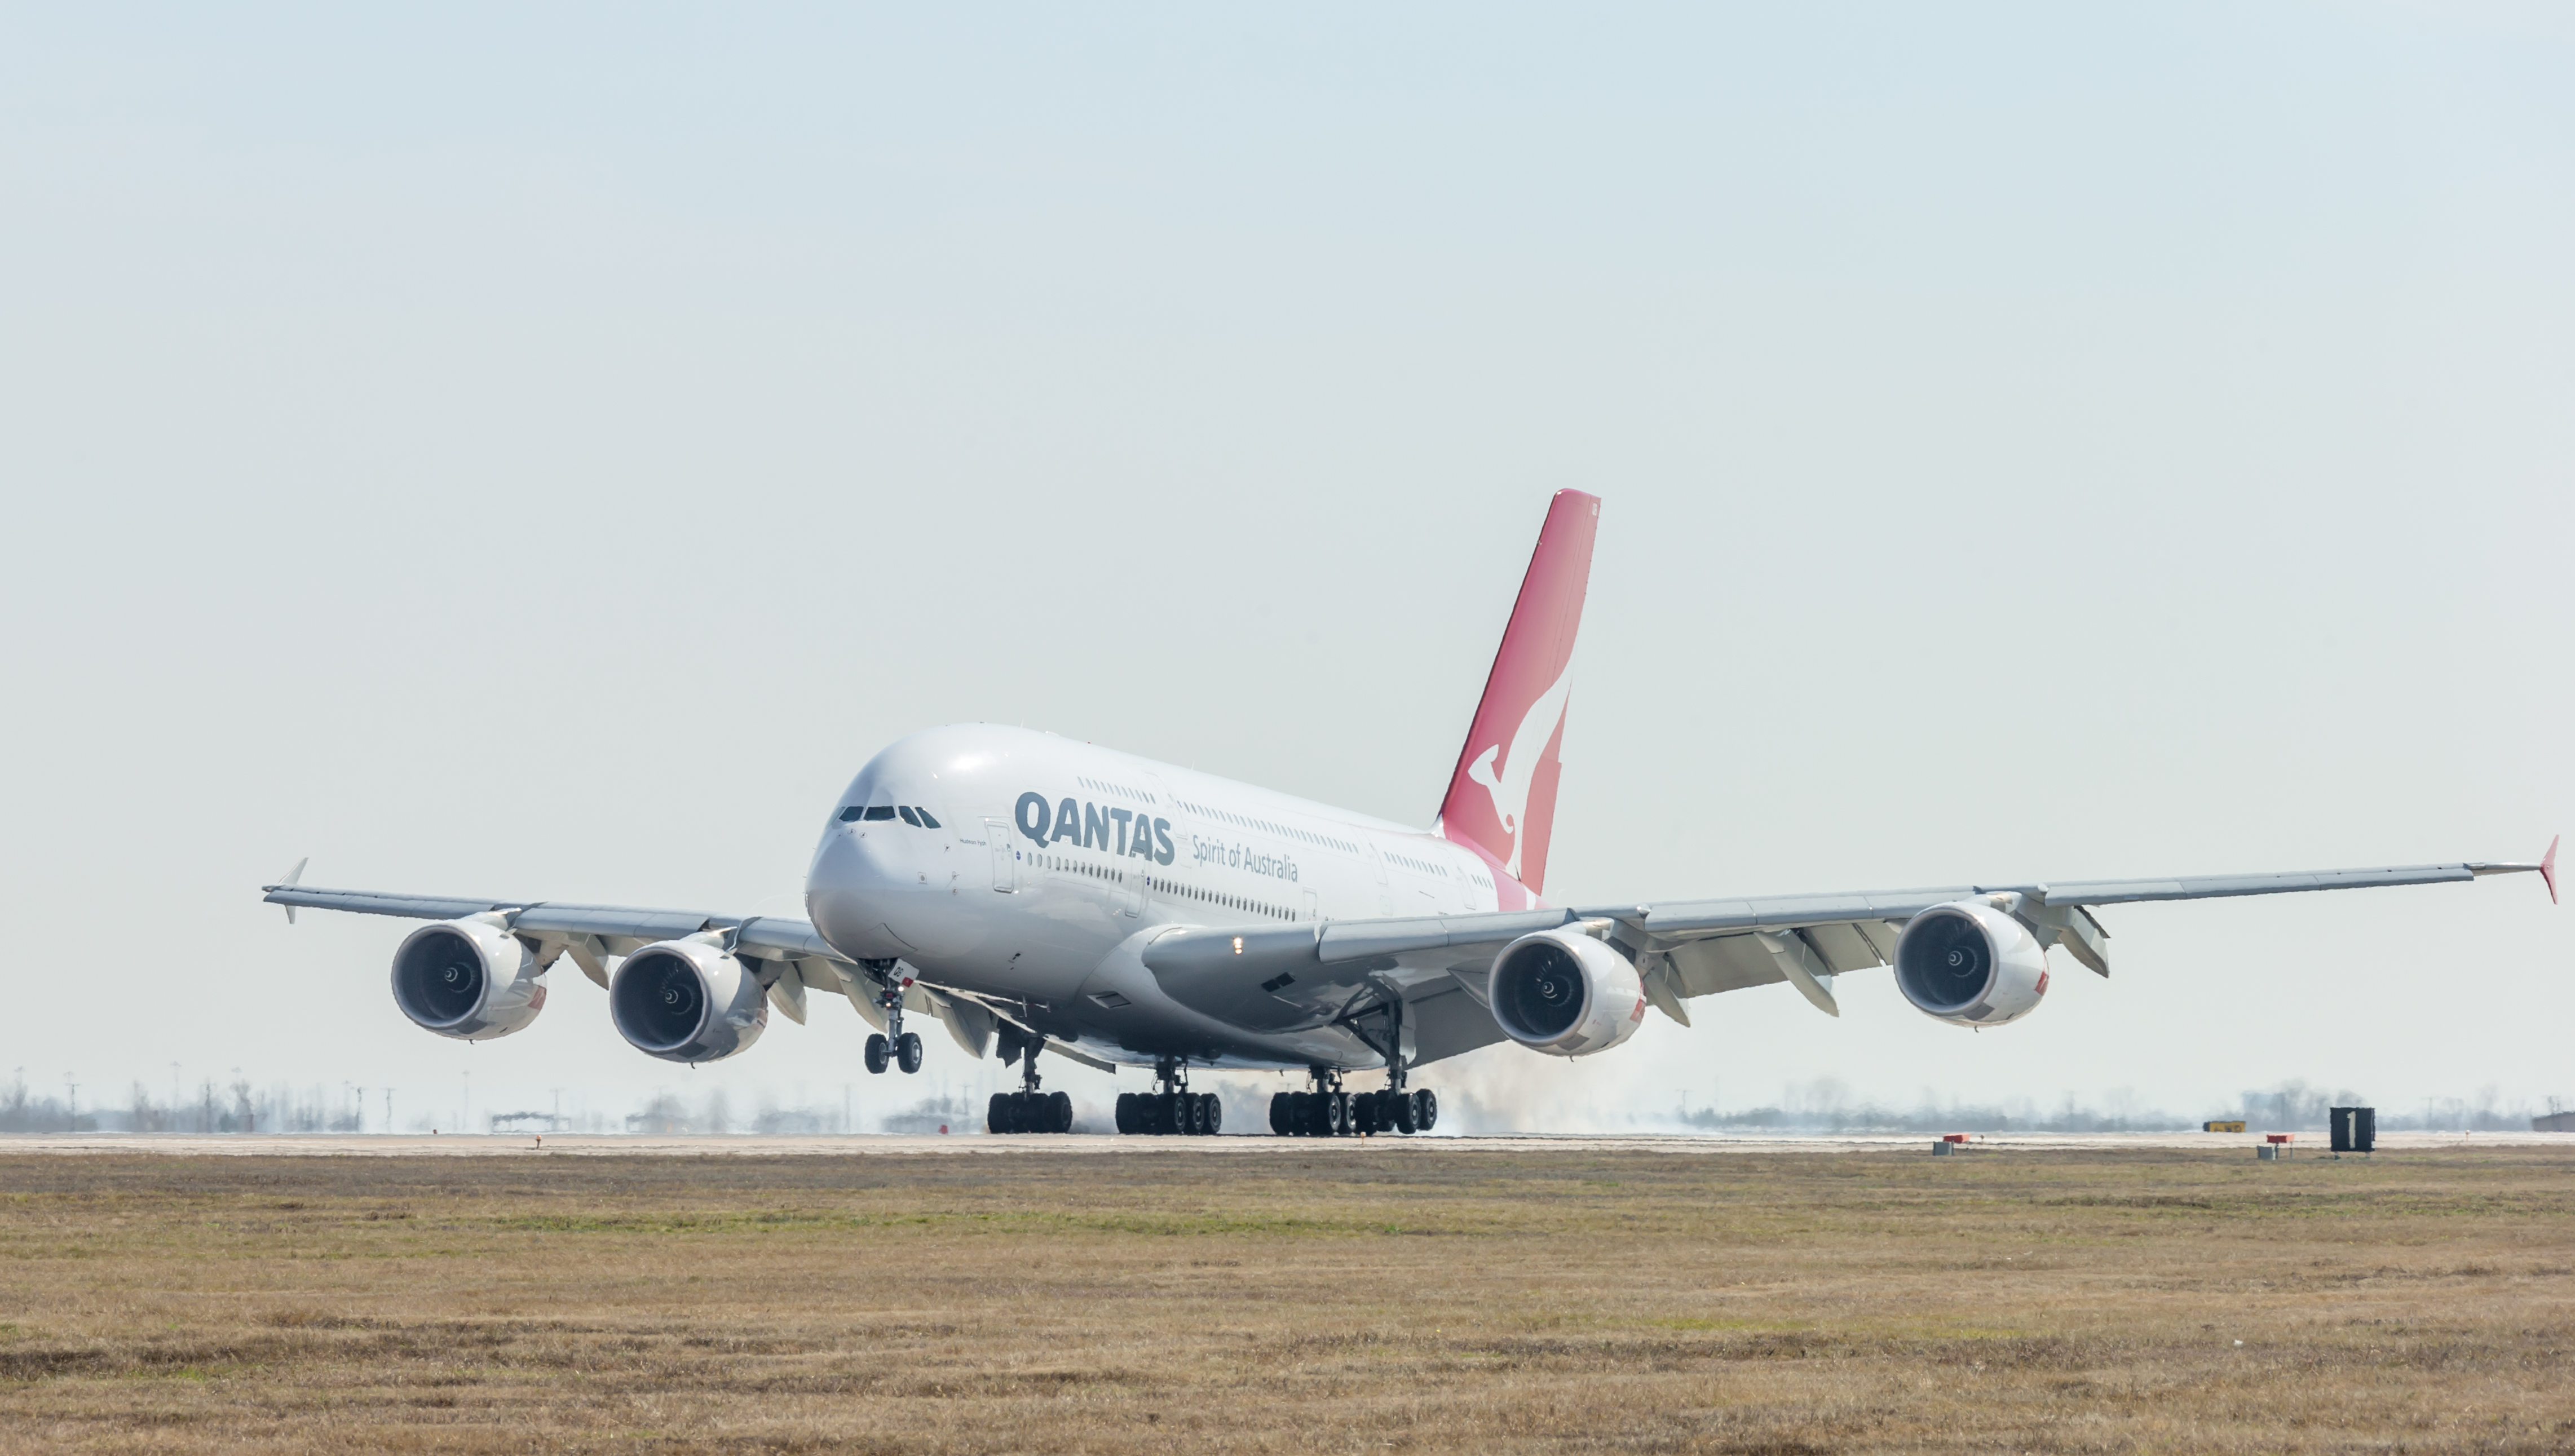 dfwairport.com - Qantas A380 DFW to Sydney Service Increases to Daily